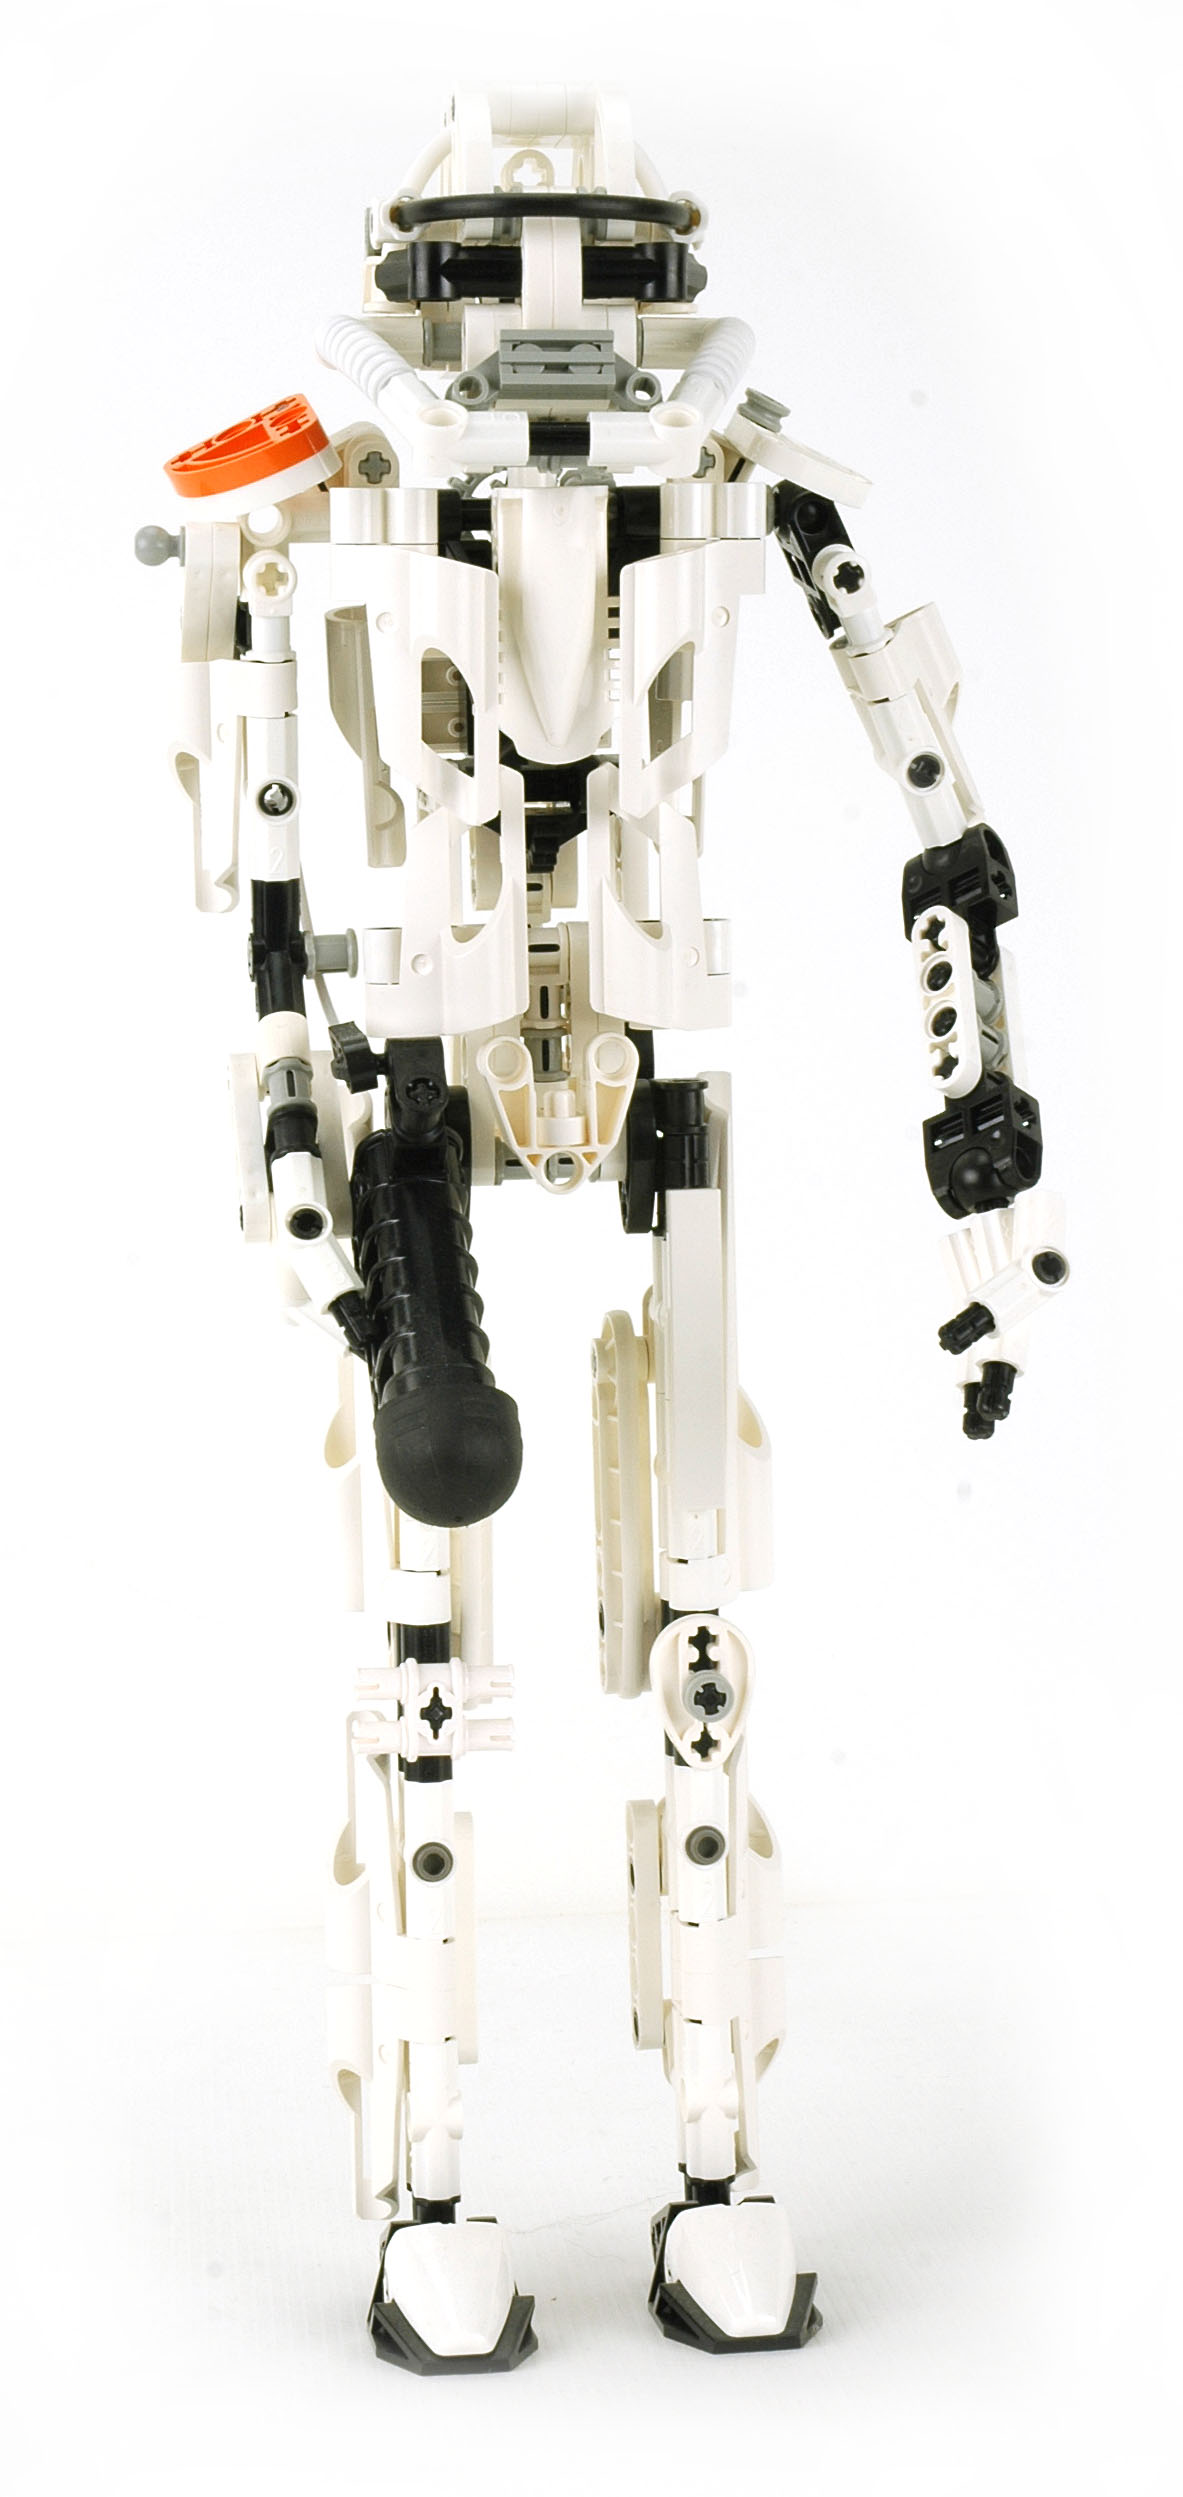 Lego Technic Star Wars 8008 Stormtrooper (New In Box)